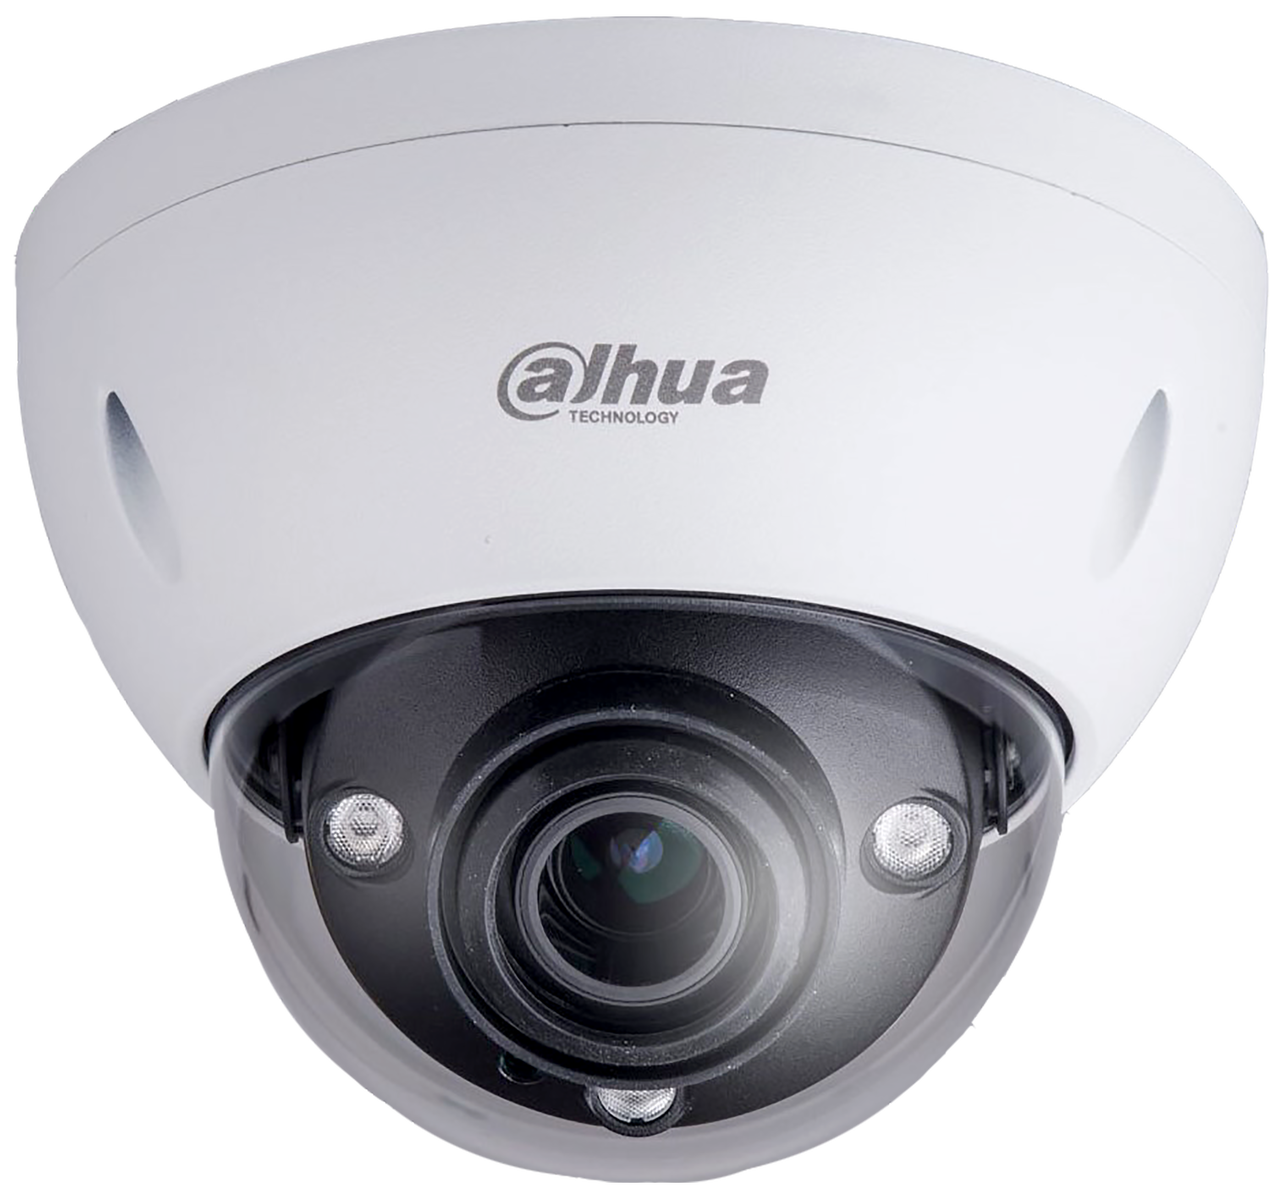 Dahua N64CL52 6MP IR 2.8mm ePoE Mini Dome Network Camera